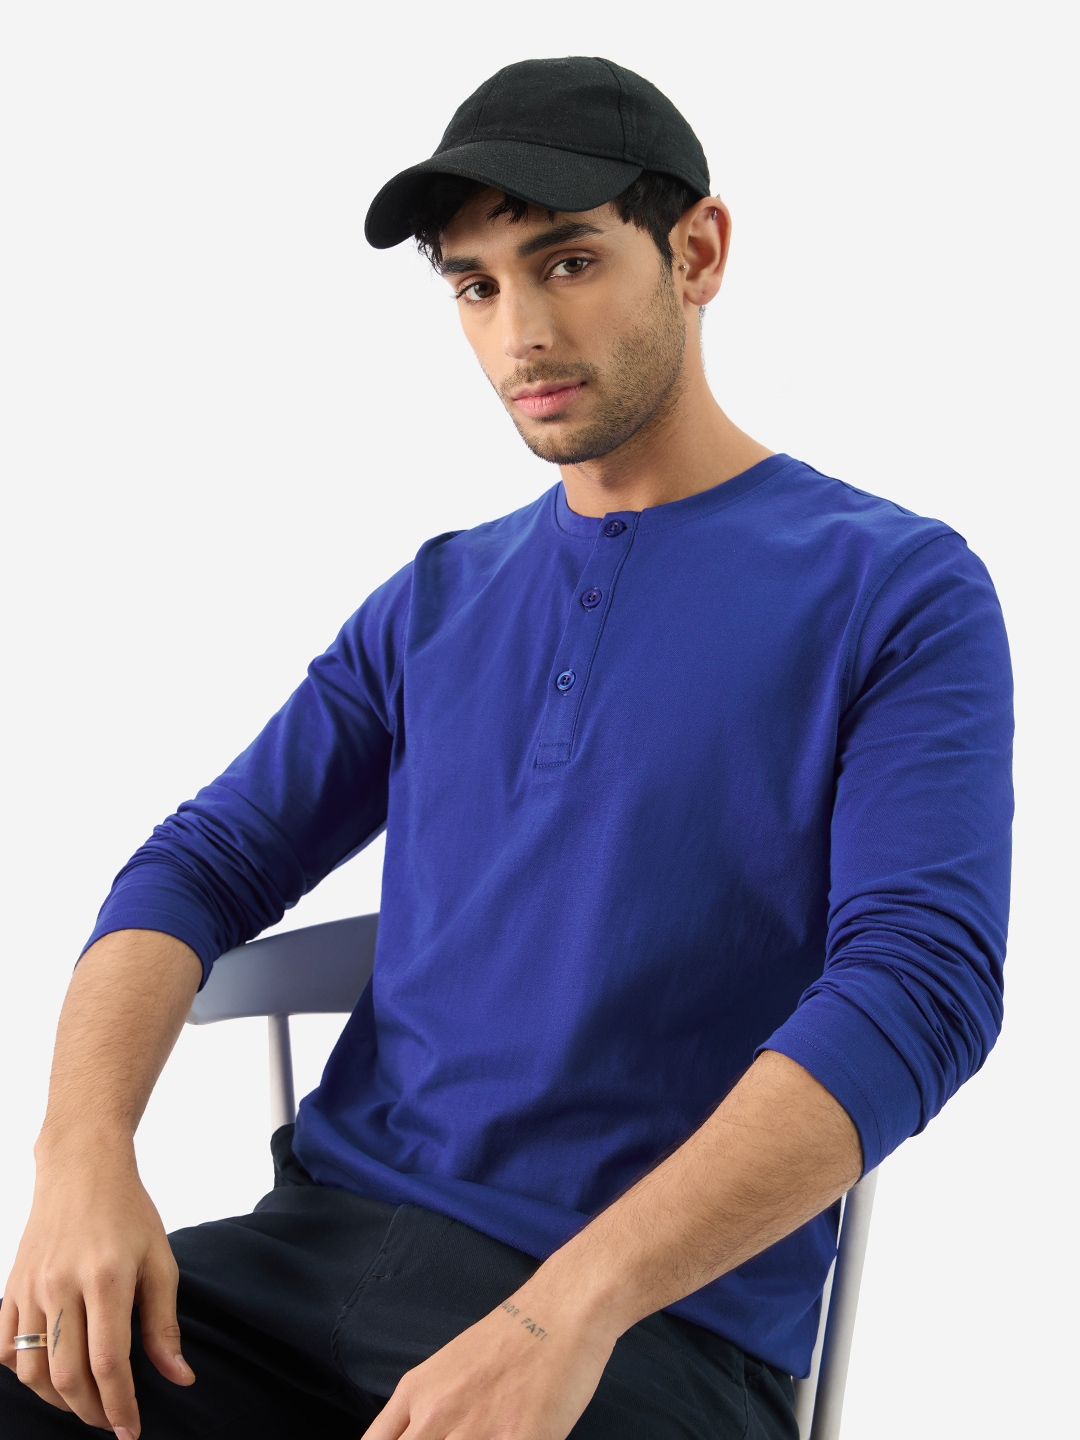 Men's Solids: Electric Blue Henley T-Shirt